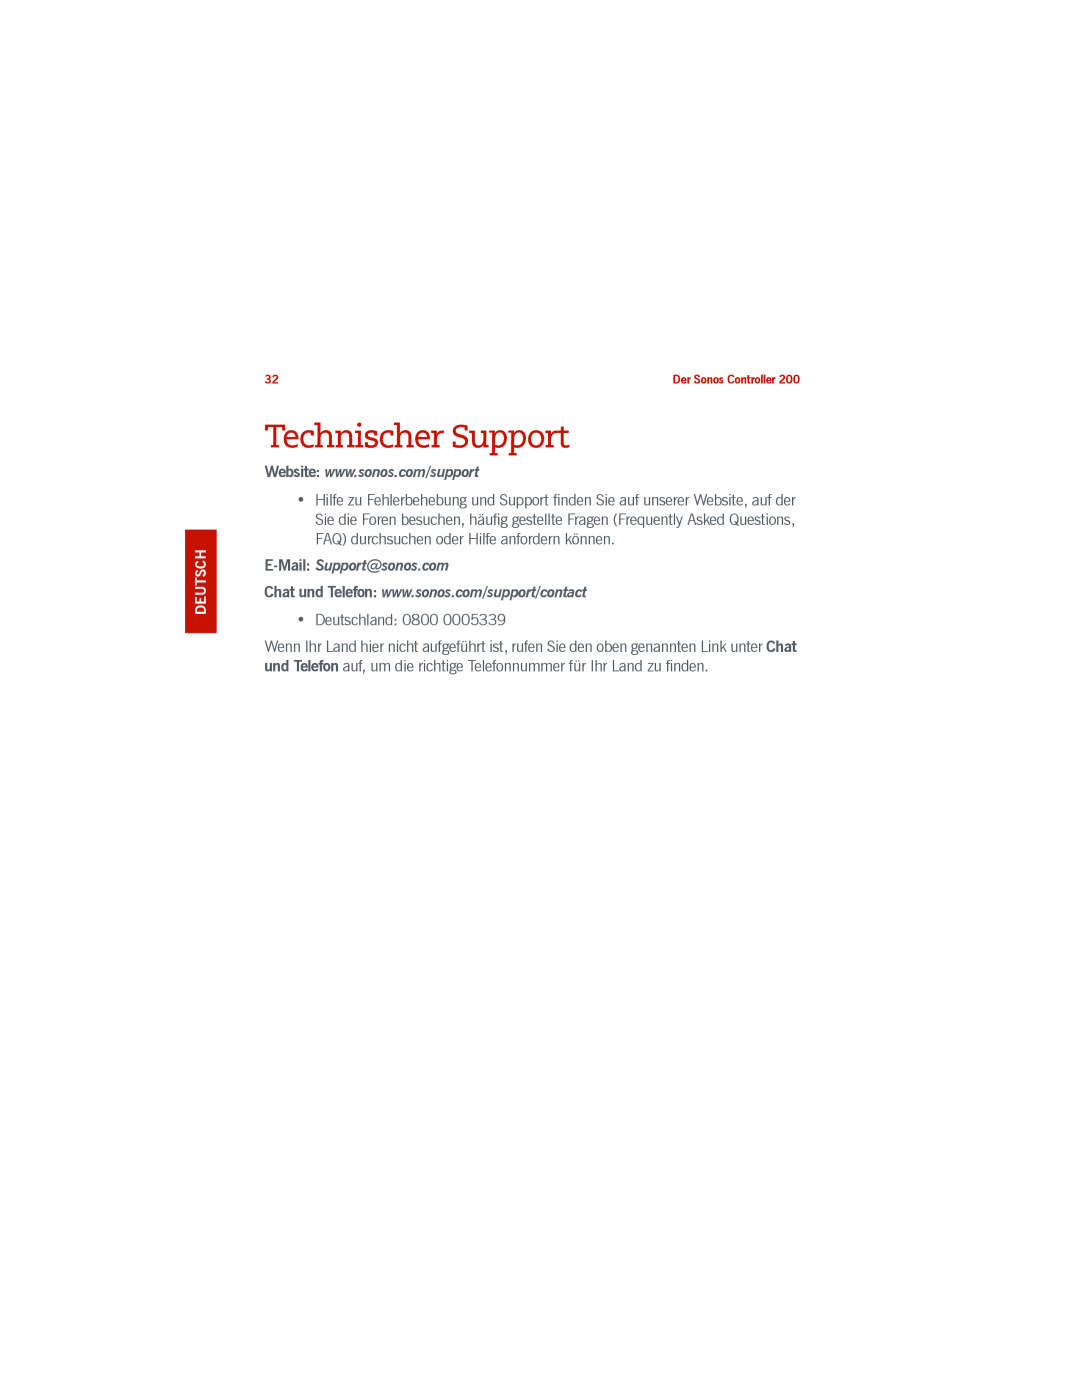 Sonos 200 manual Technischer Support, E-Mail: Support@sonos.com, Svenska Nederlands Deutsch English 